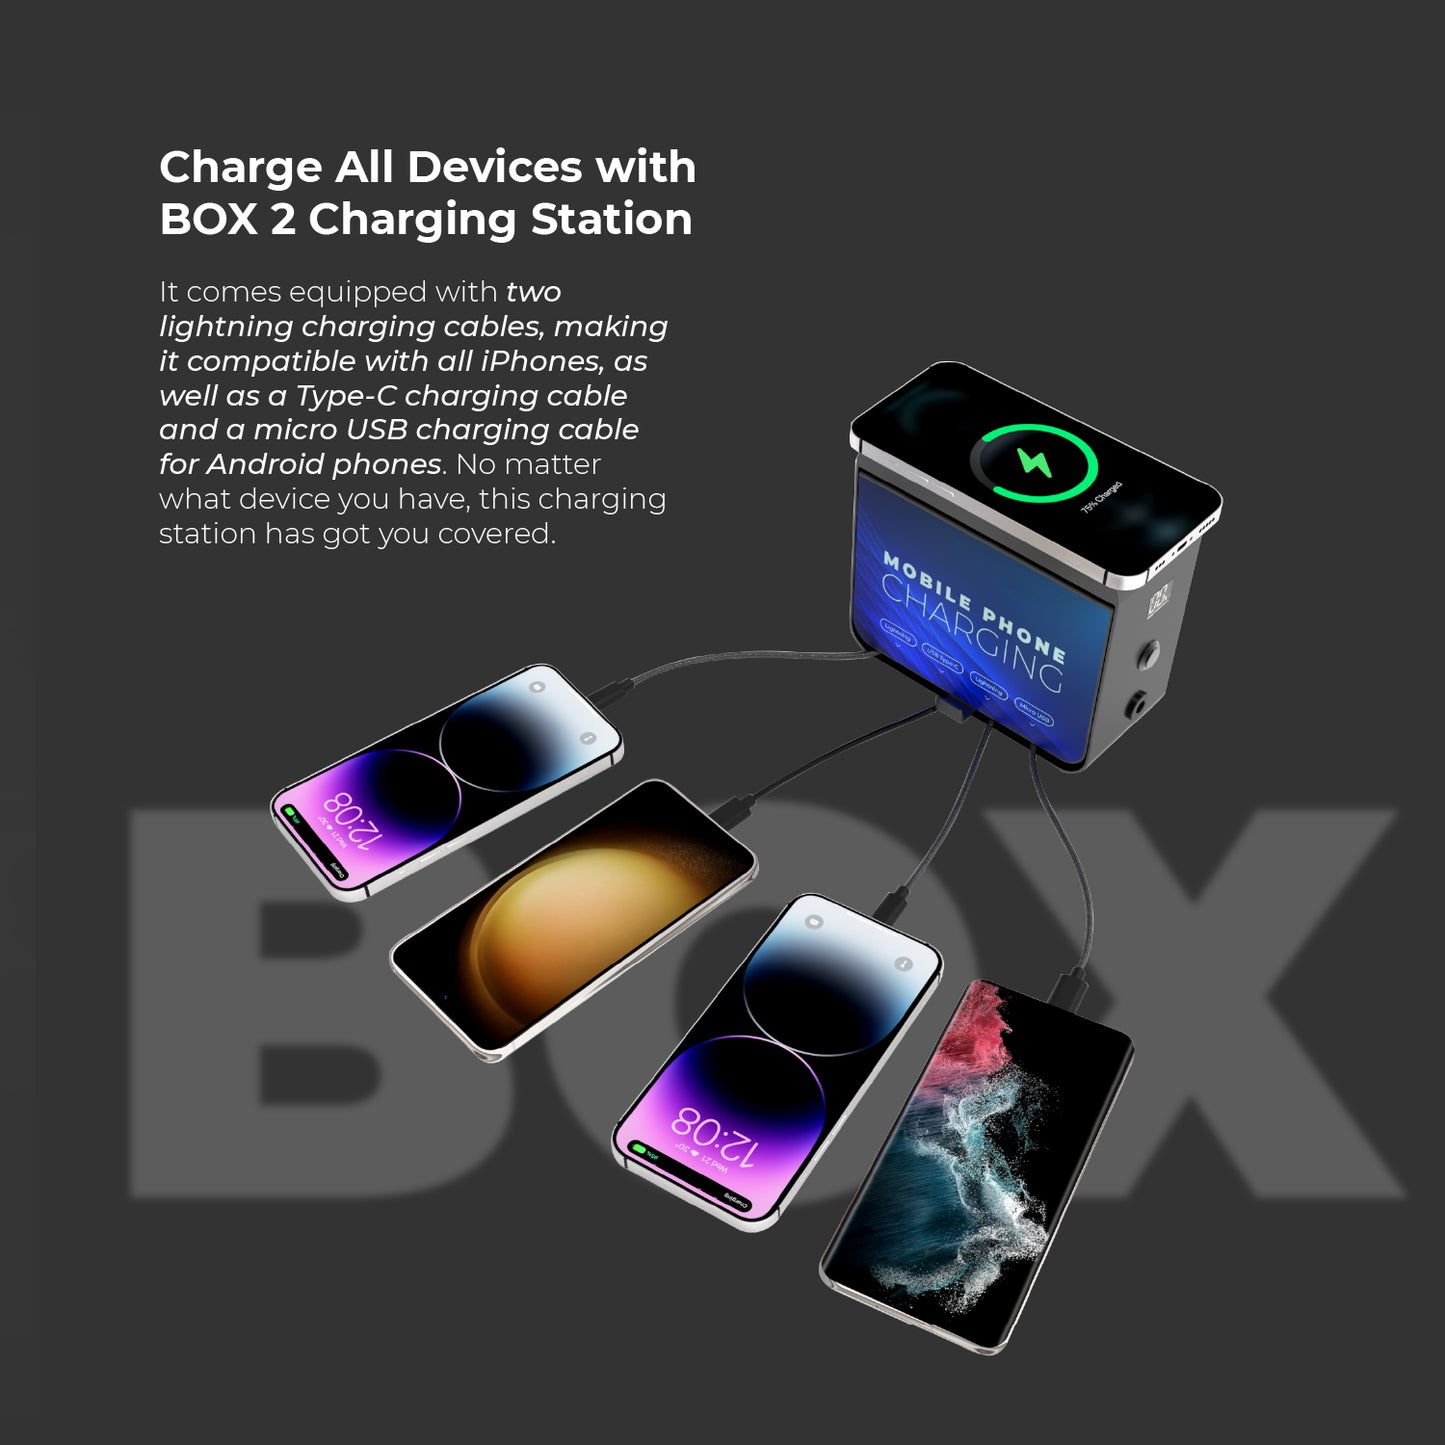 BOX 2 Battery Powered Desktop Charging Station